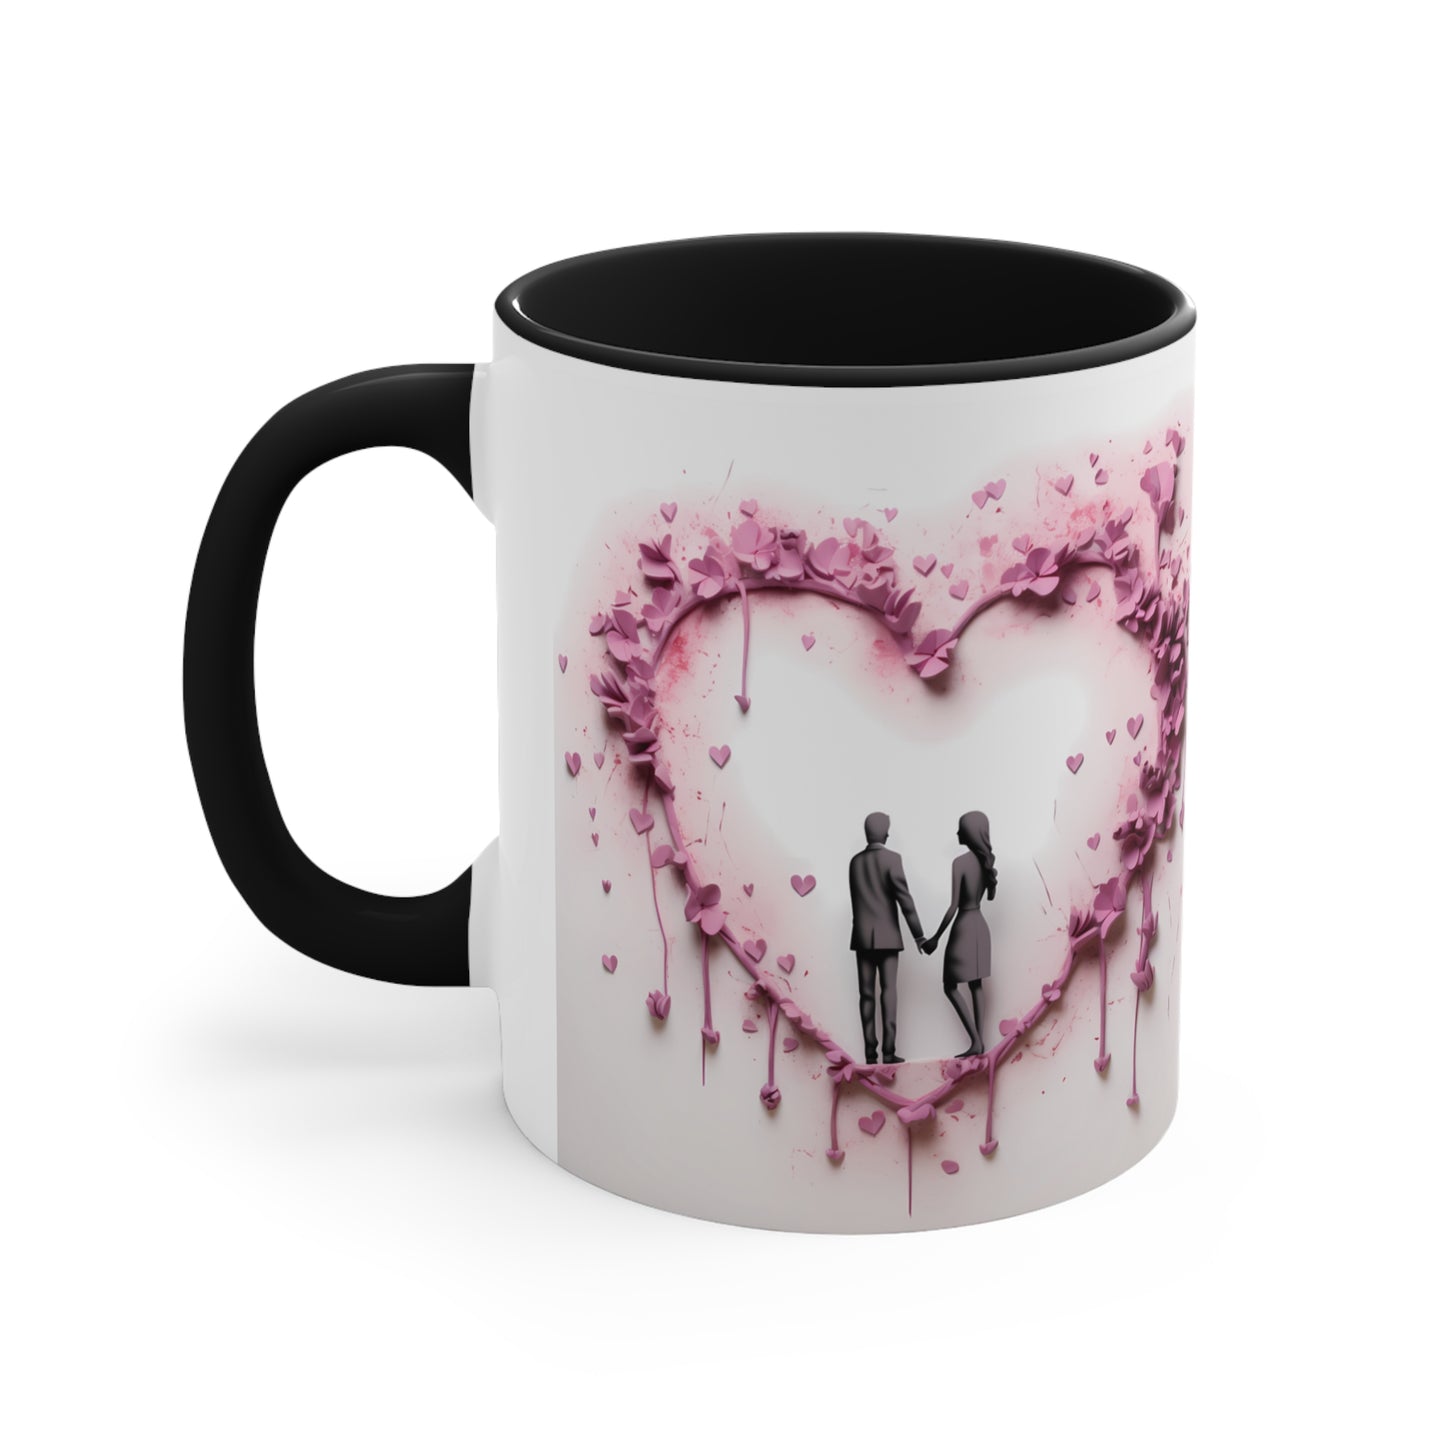 3D Valentine heart mug, couple mug, love heart couple mug, Funny Valentine Heart Candy, heart candy mug, conversation heart mug, Heart-Shaped Mug, Coffee Mug, 11oz